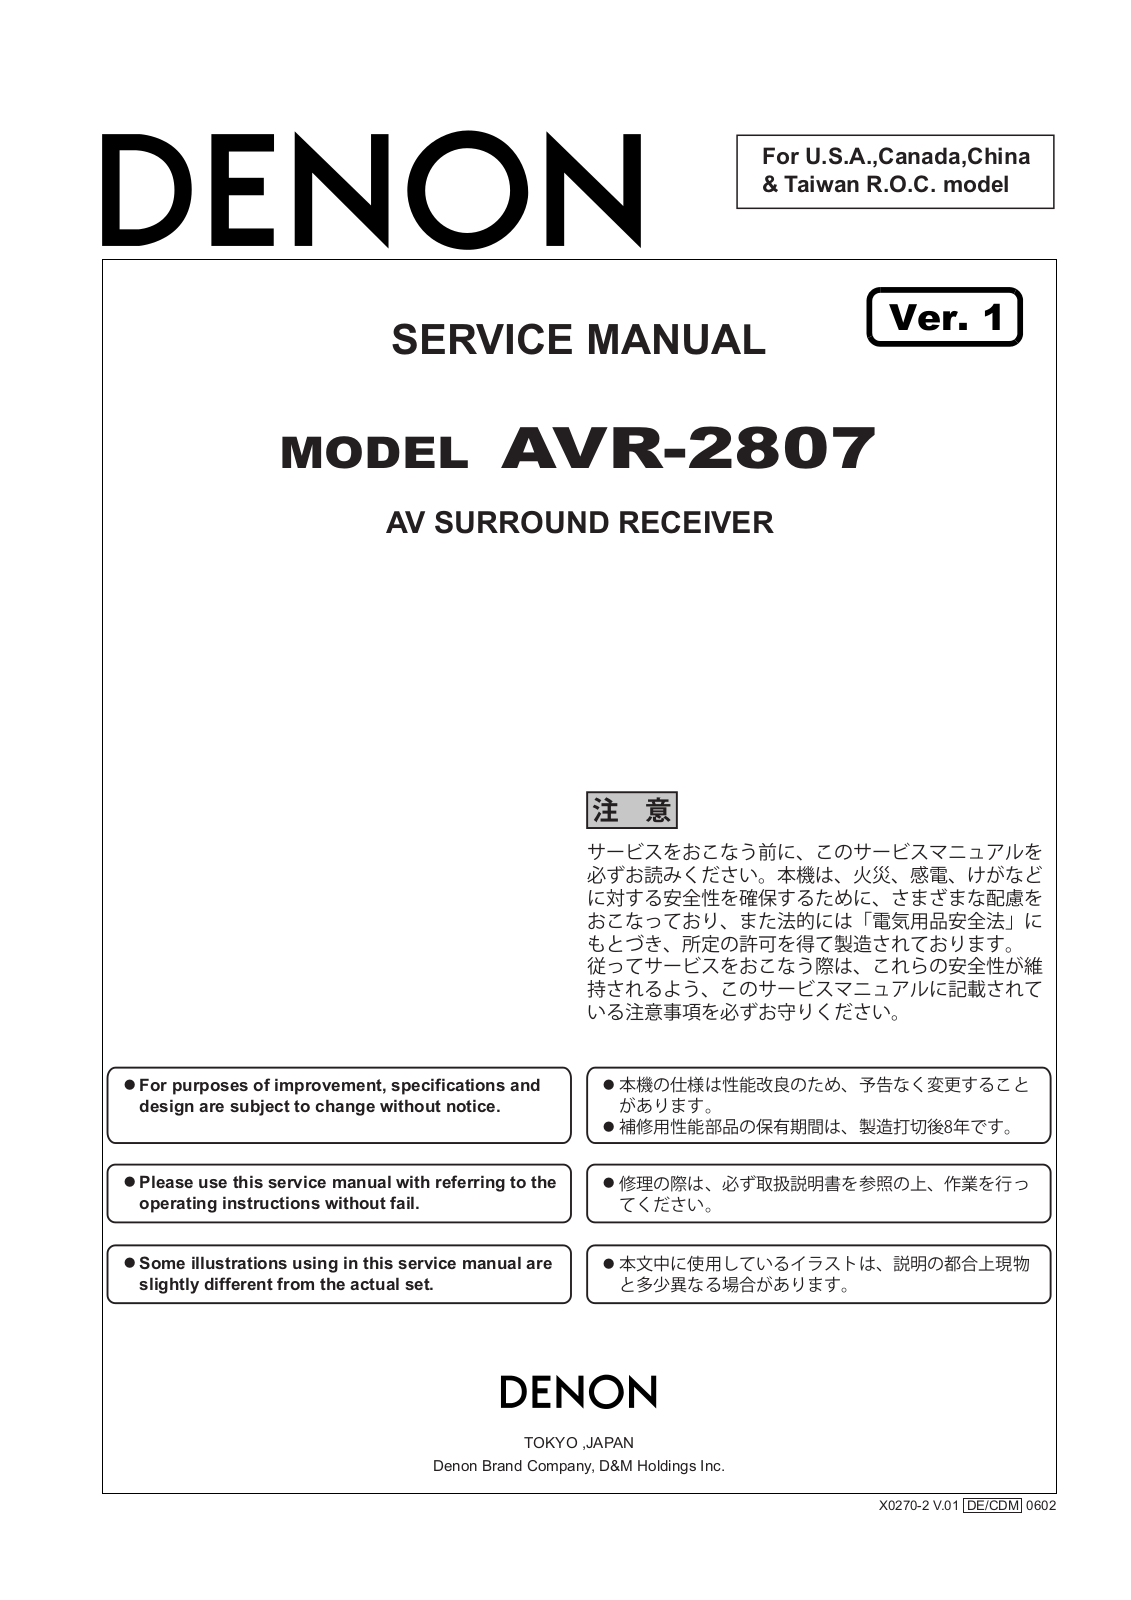 Denon AVR-2807 Service Manual